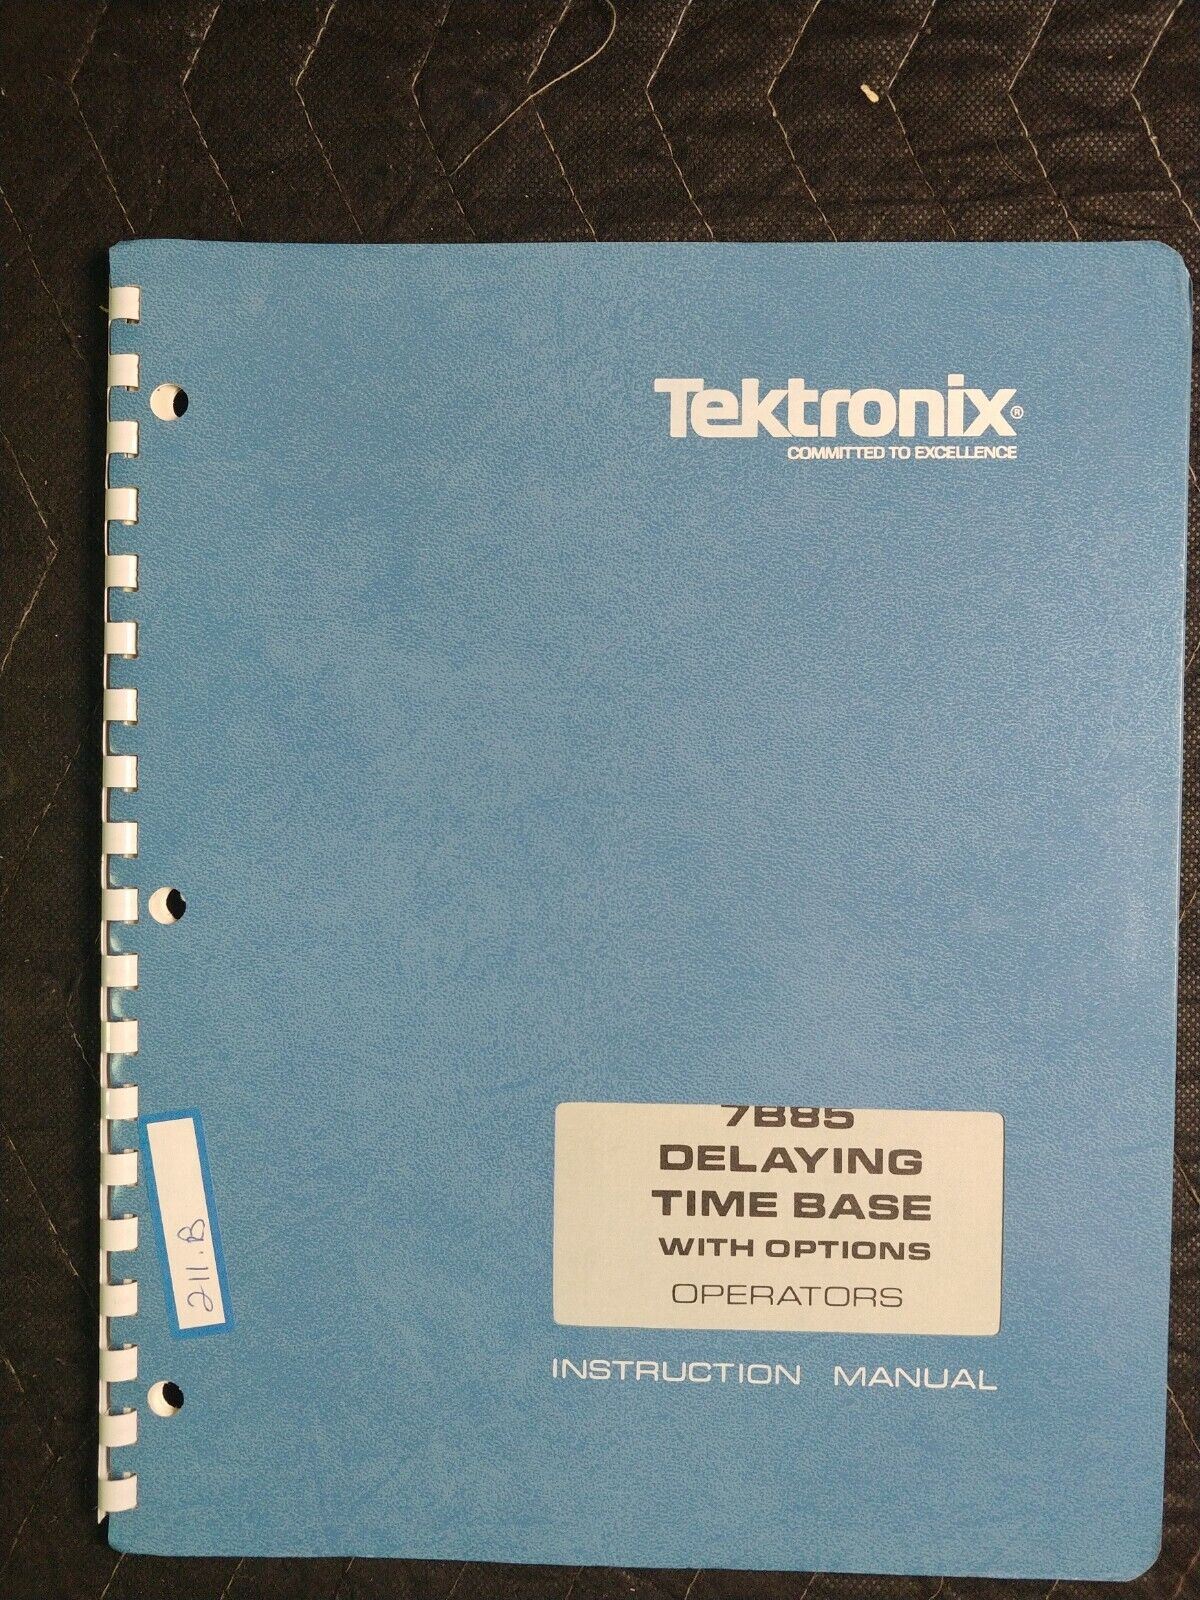 Tektronix 7B85 Delaying Time Base with Options Instruction & Service Manual